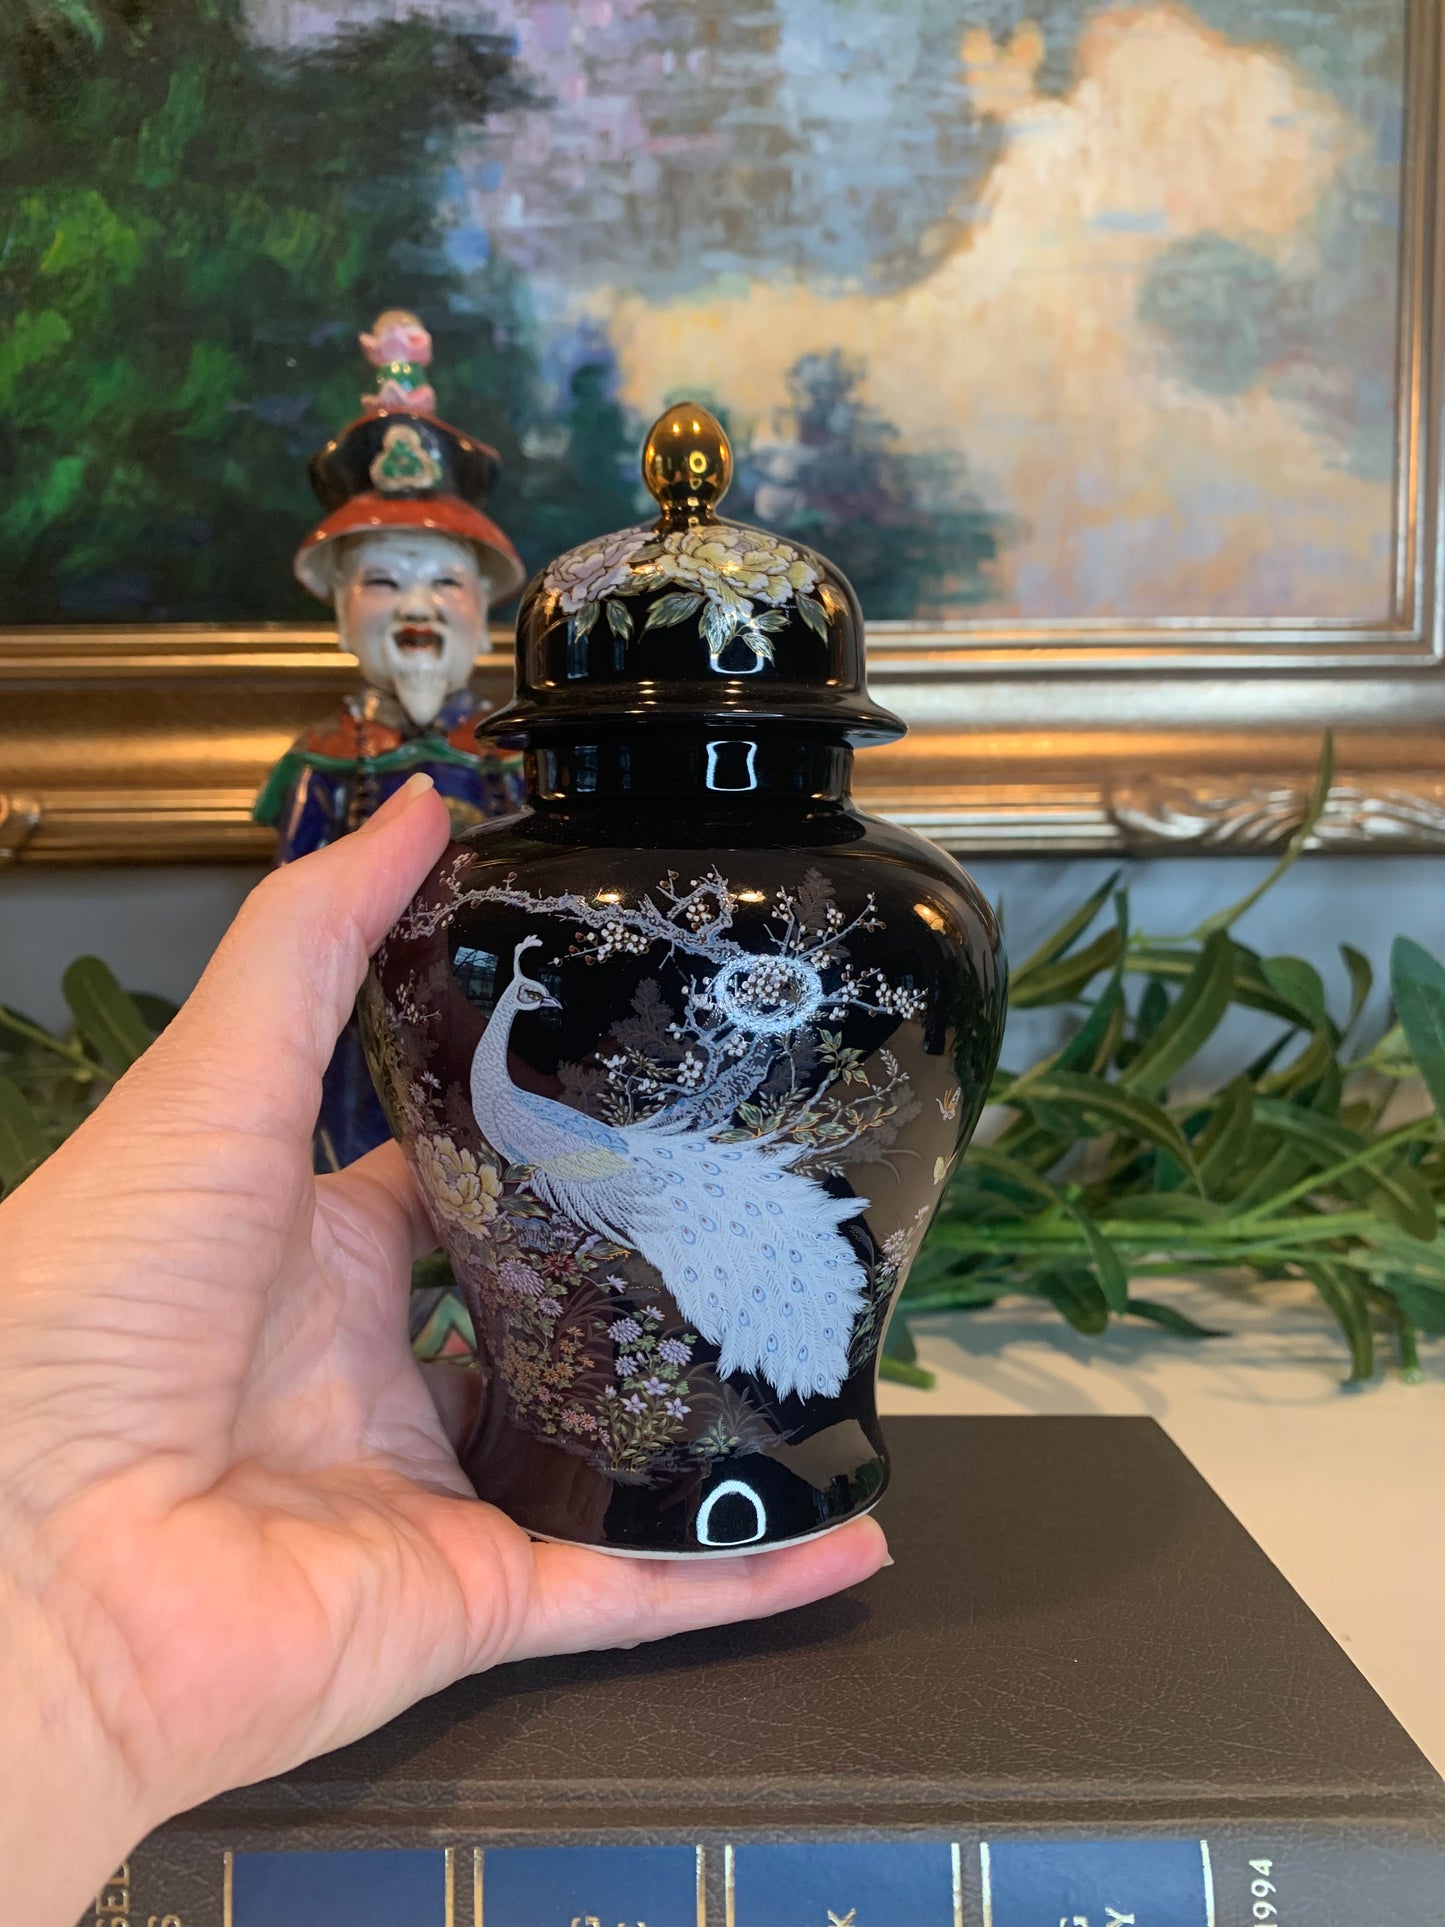 Striking Shibata Jar with White Peacock on a Black Background